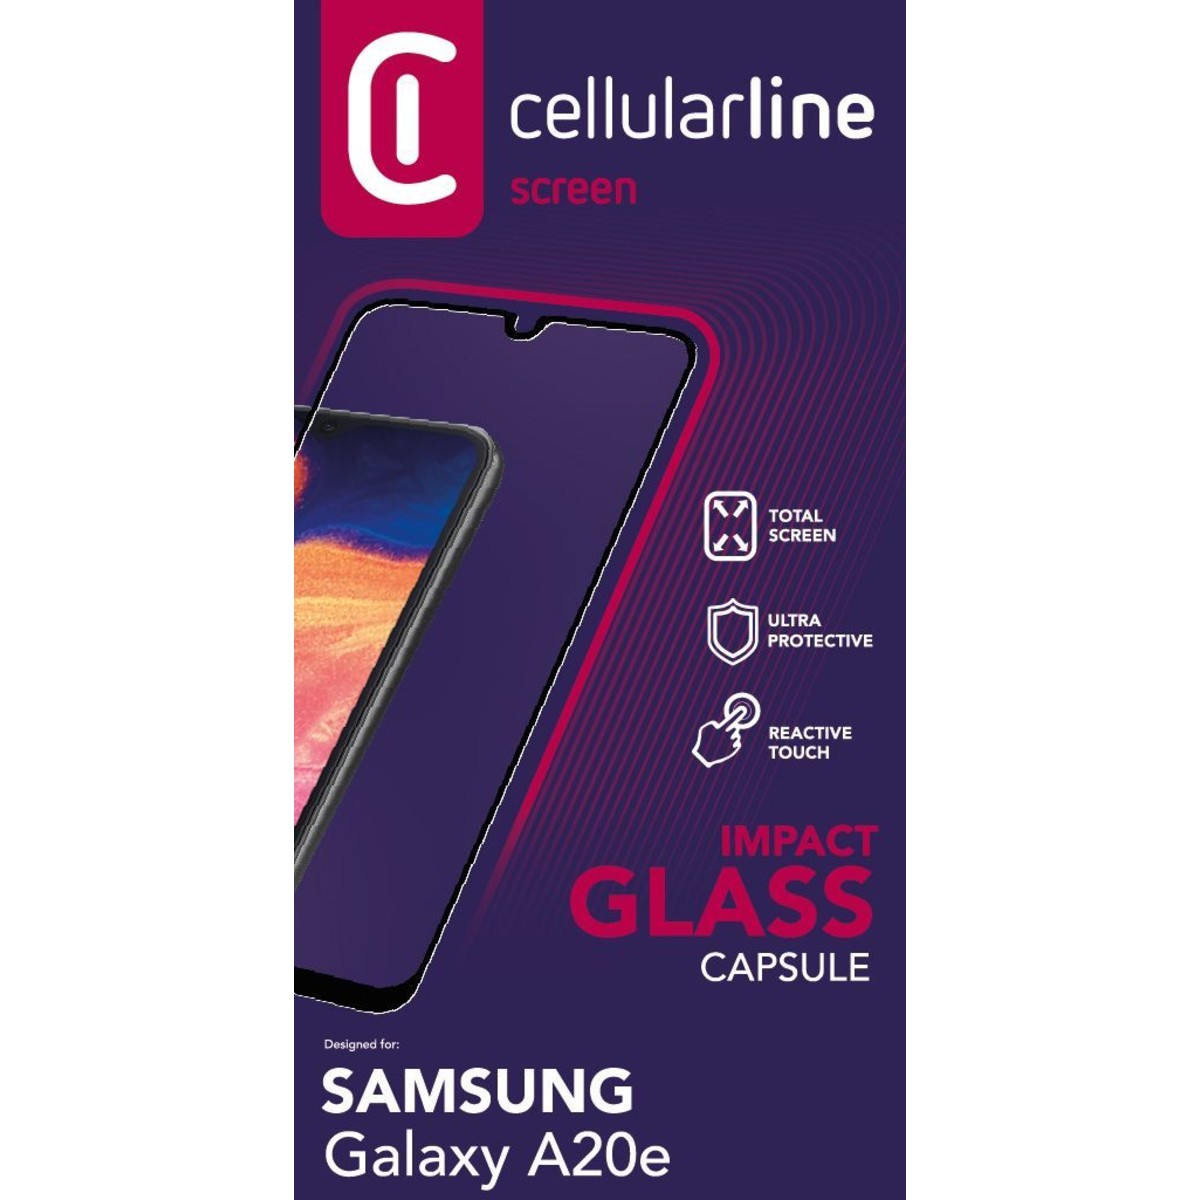 Schutzglas IMPACT GLASS CAPSULE für Samsung Galaxy A20e